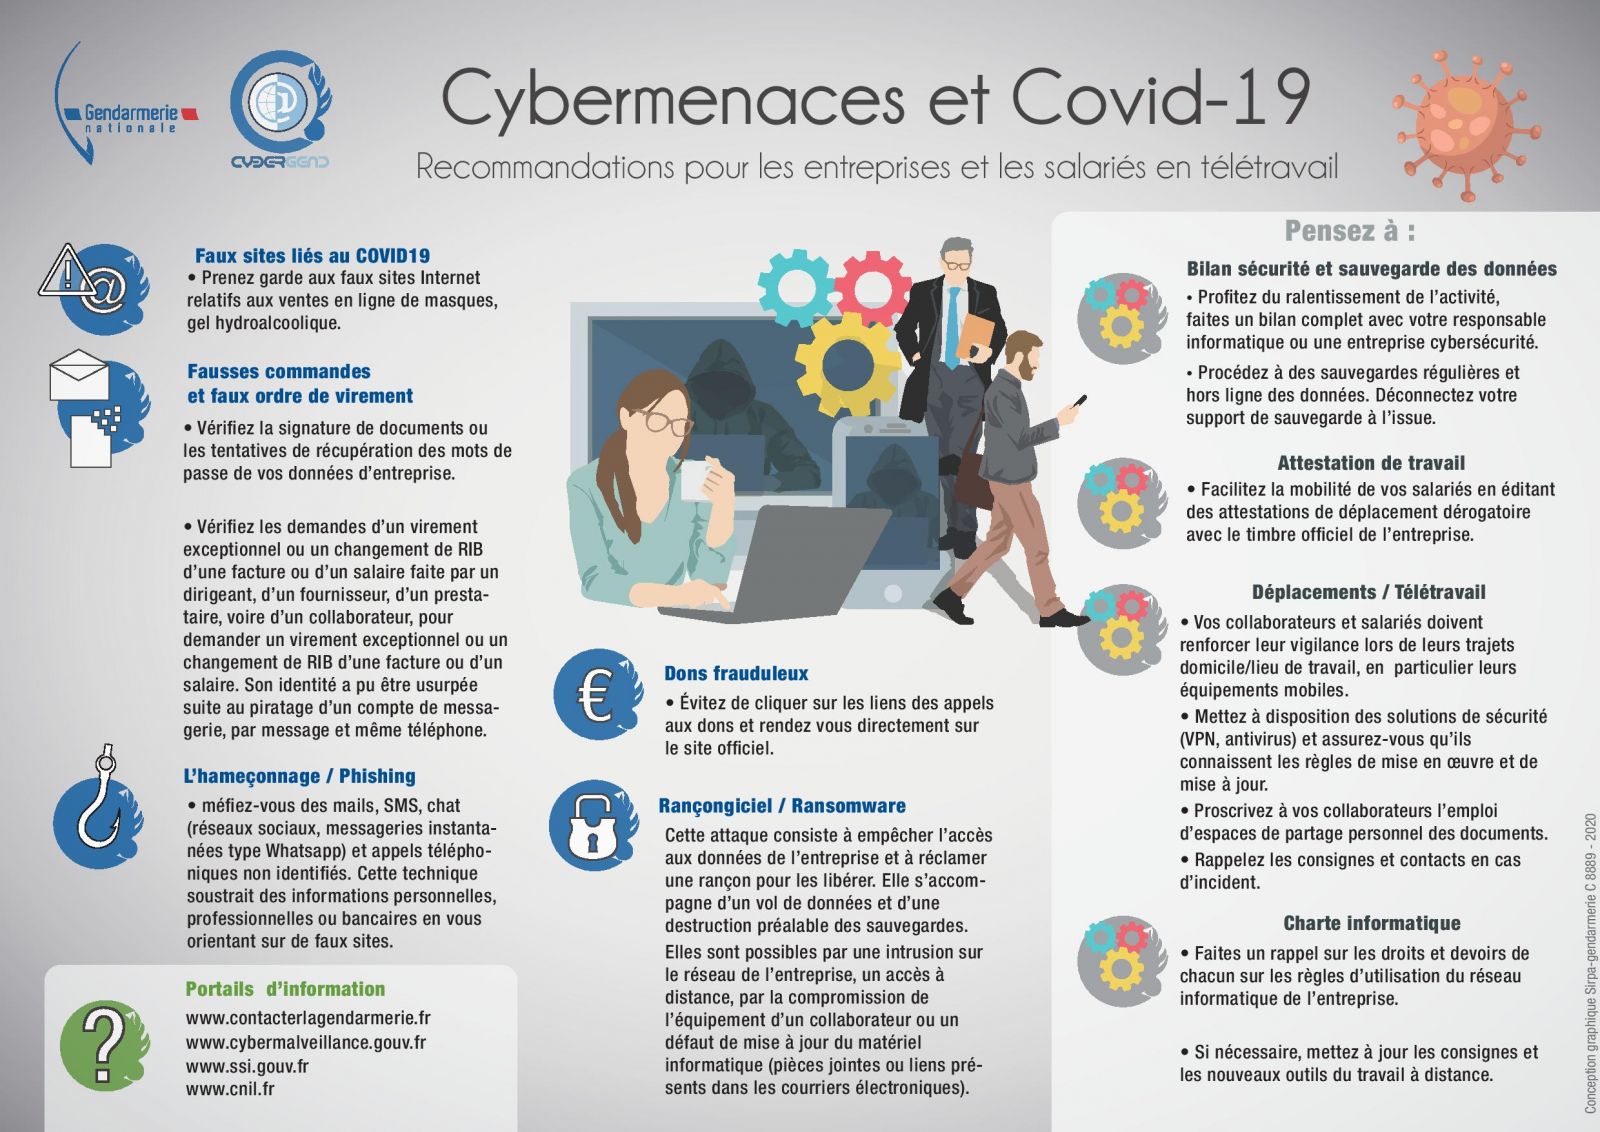 Cybermenaces covid-19